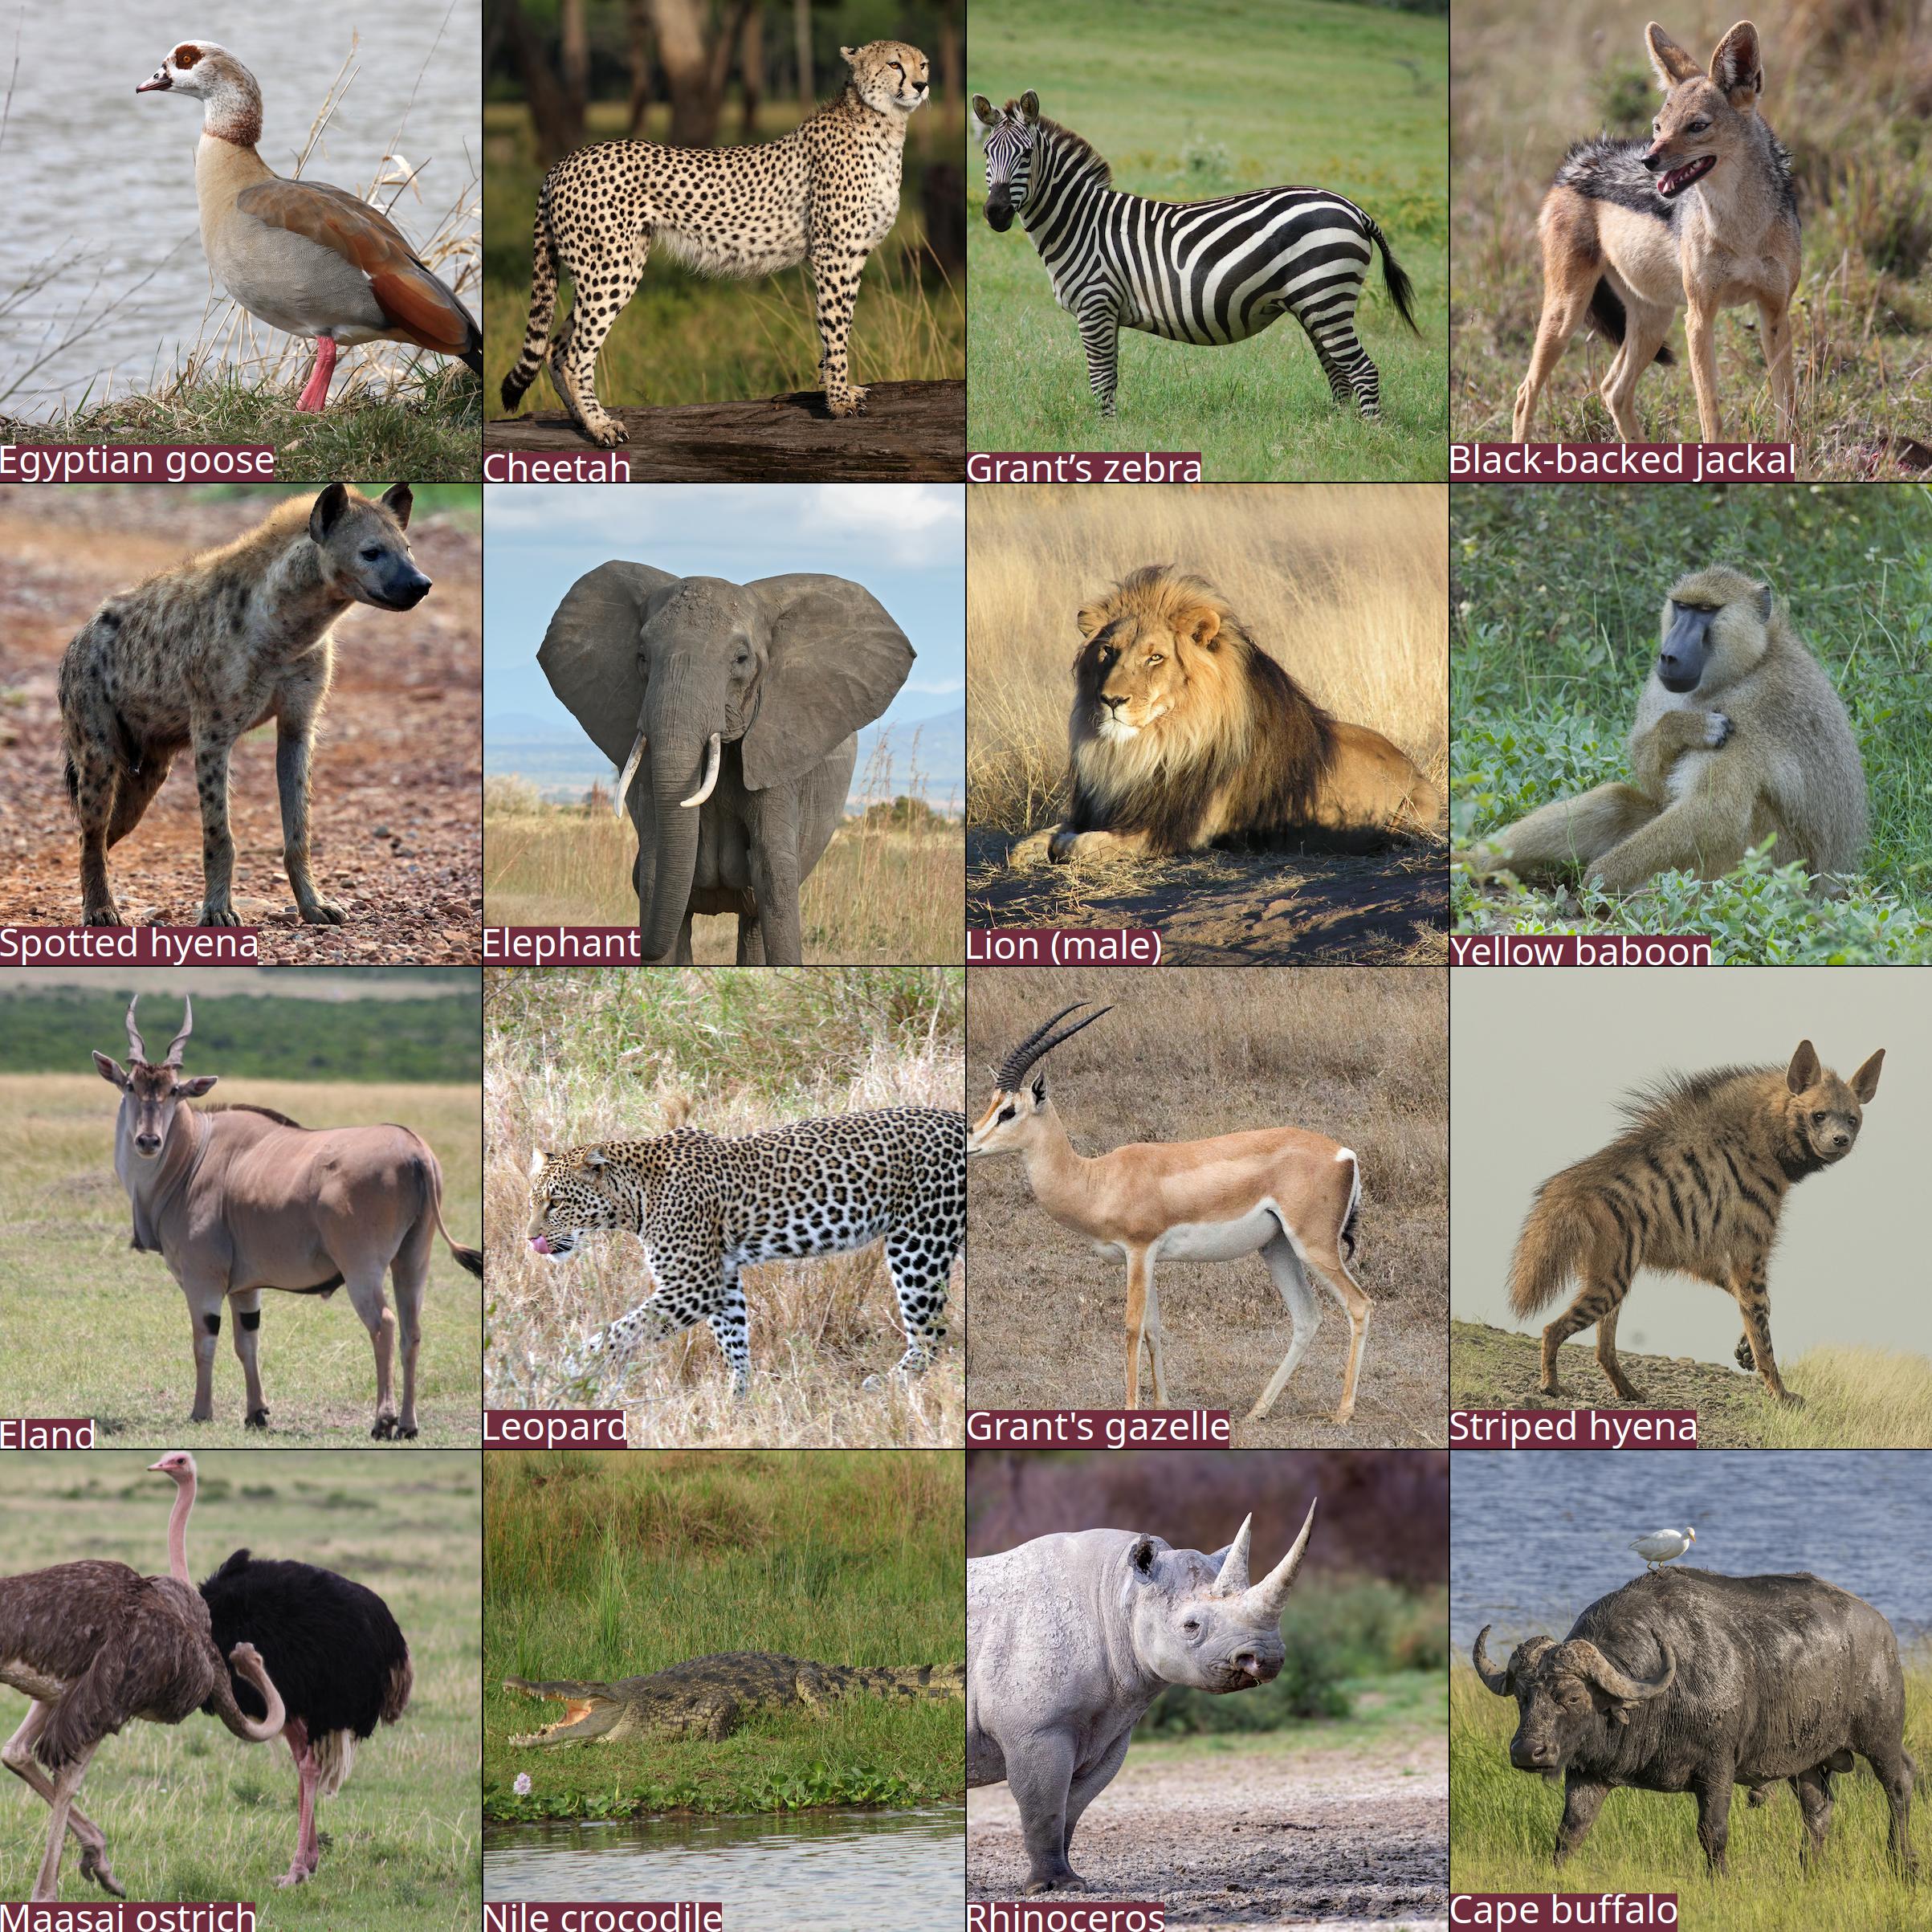 Example bingo card showing a 4x4 grid of Sub-Saharan African wildlife